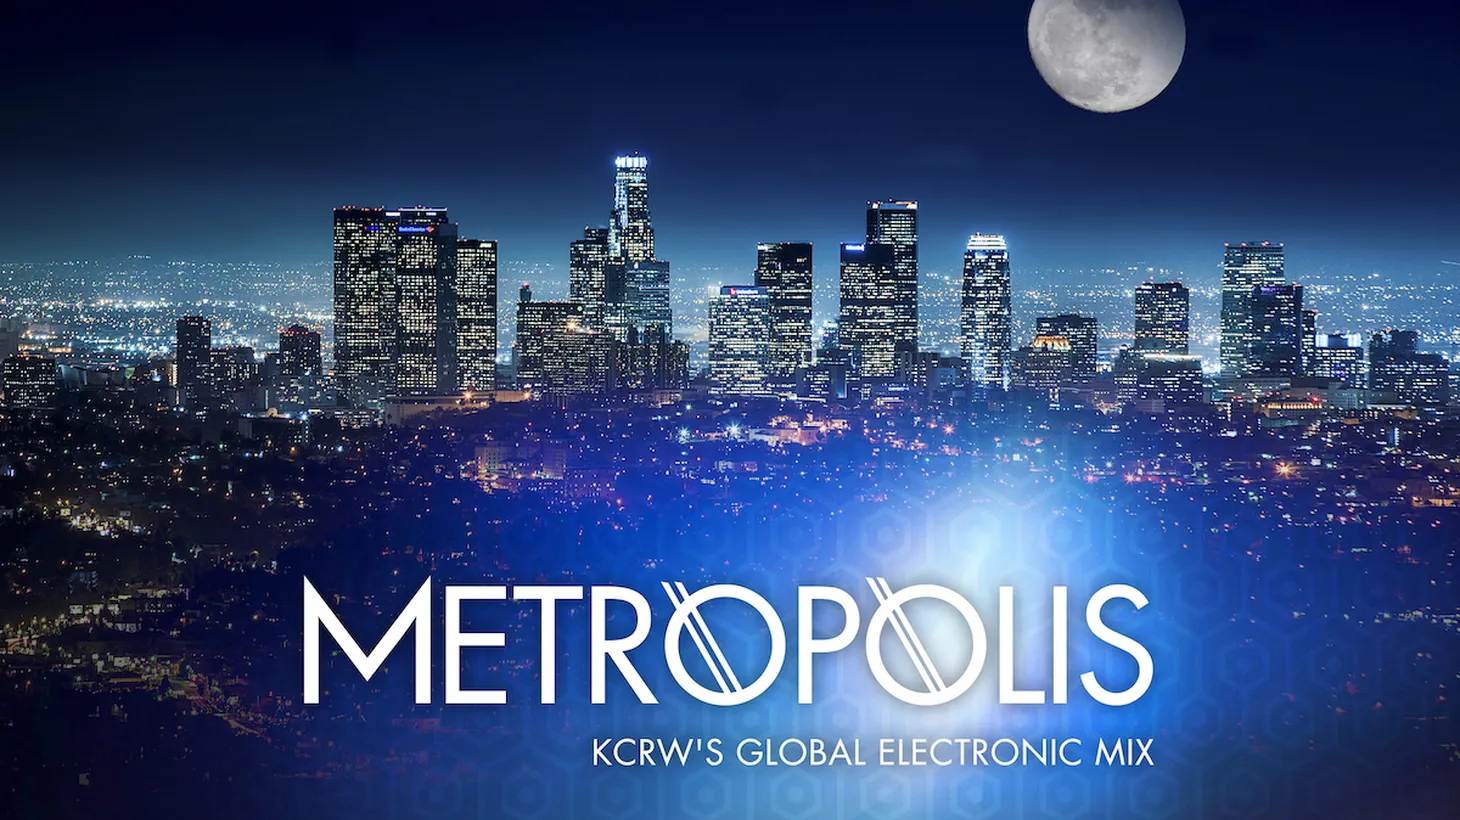 Metropolis playlist, March 12, 2022.